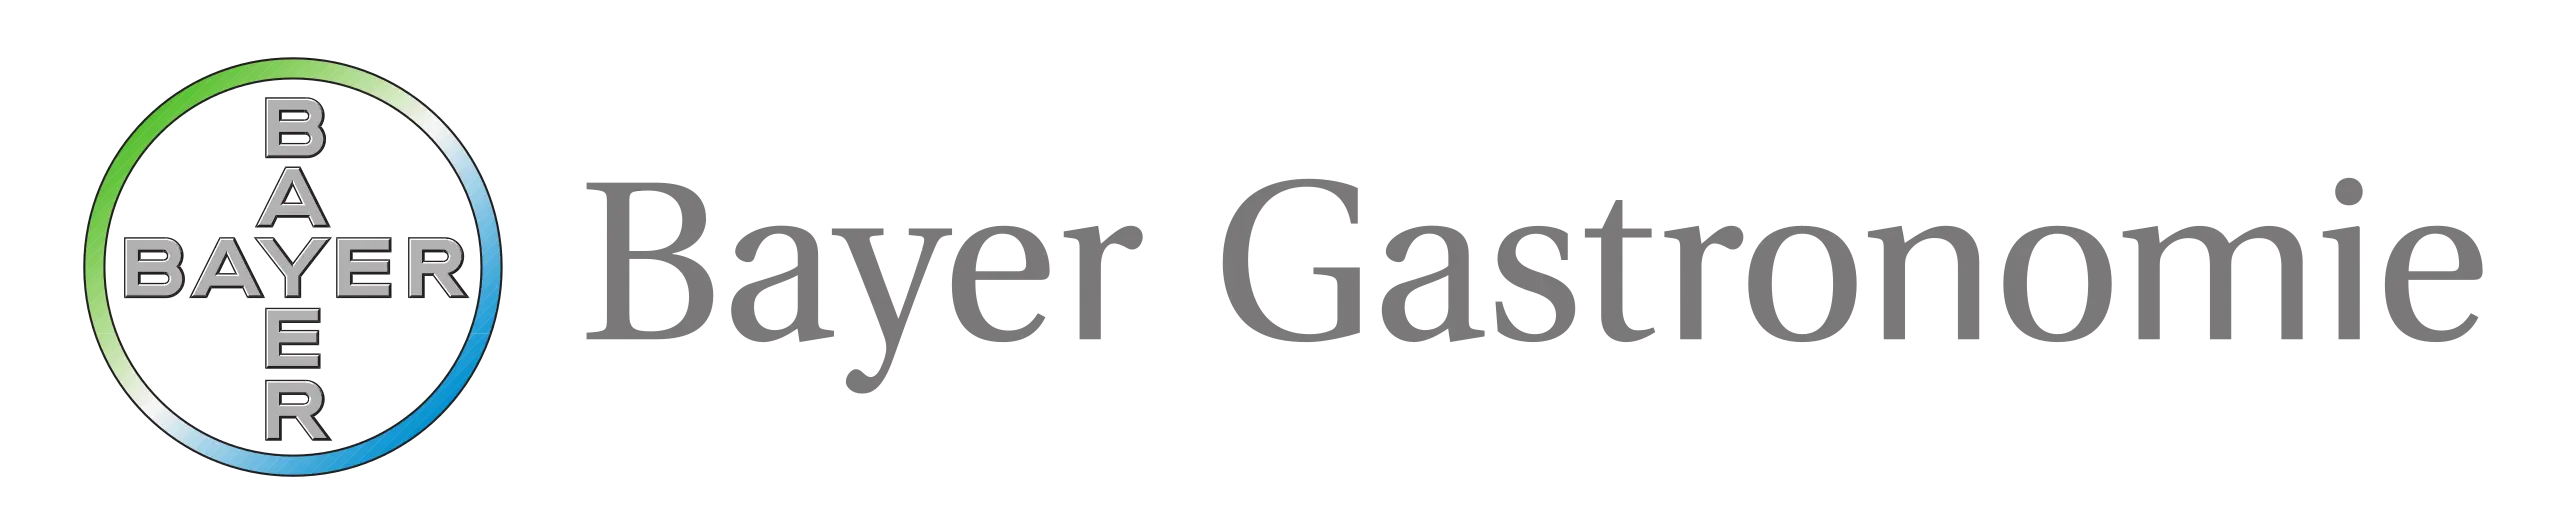 Bayer-Gastronomie-Logo.svg-1